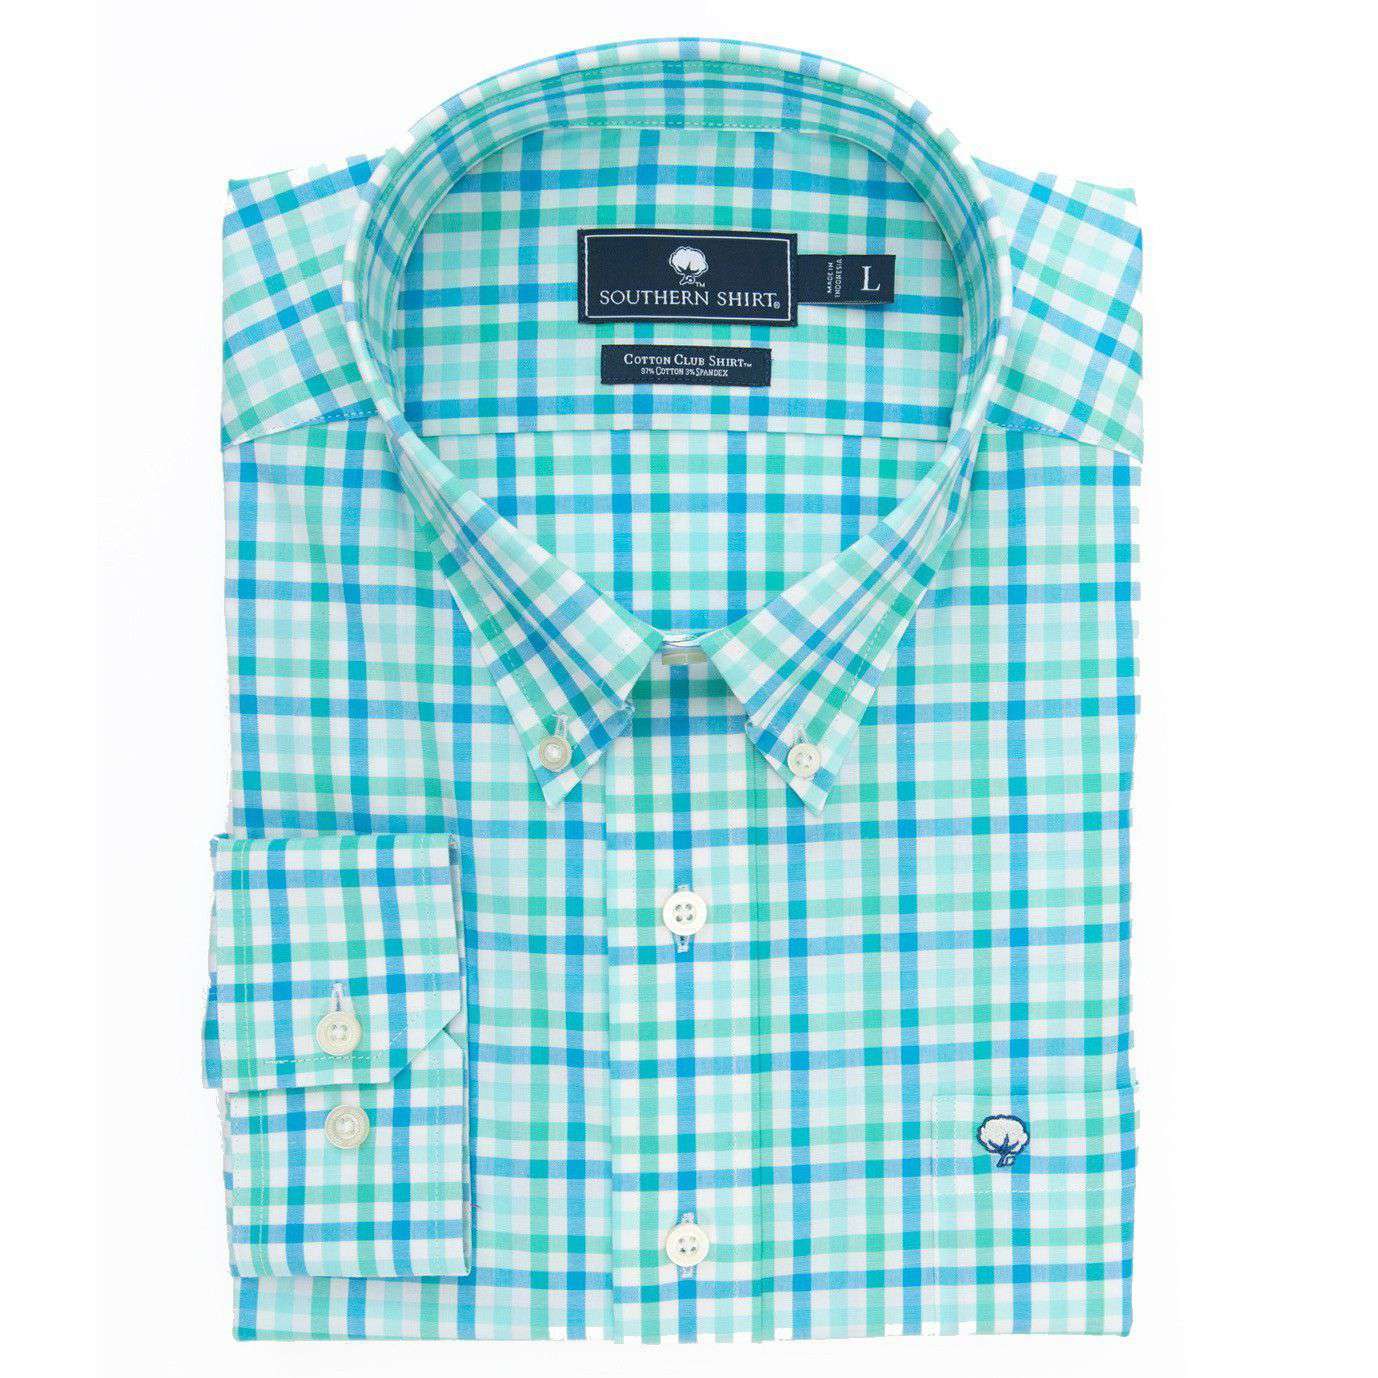 Midtown Plaid Cotton Club Shirt in Aqua Green by The Southern Shirt Co. - Country Club Prep